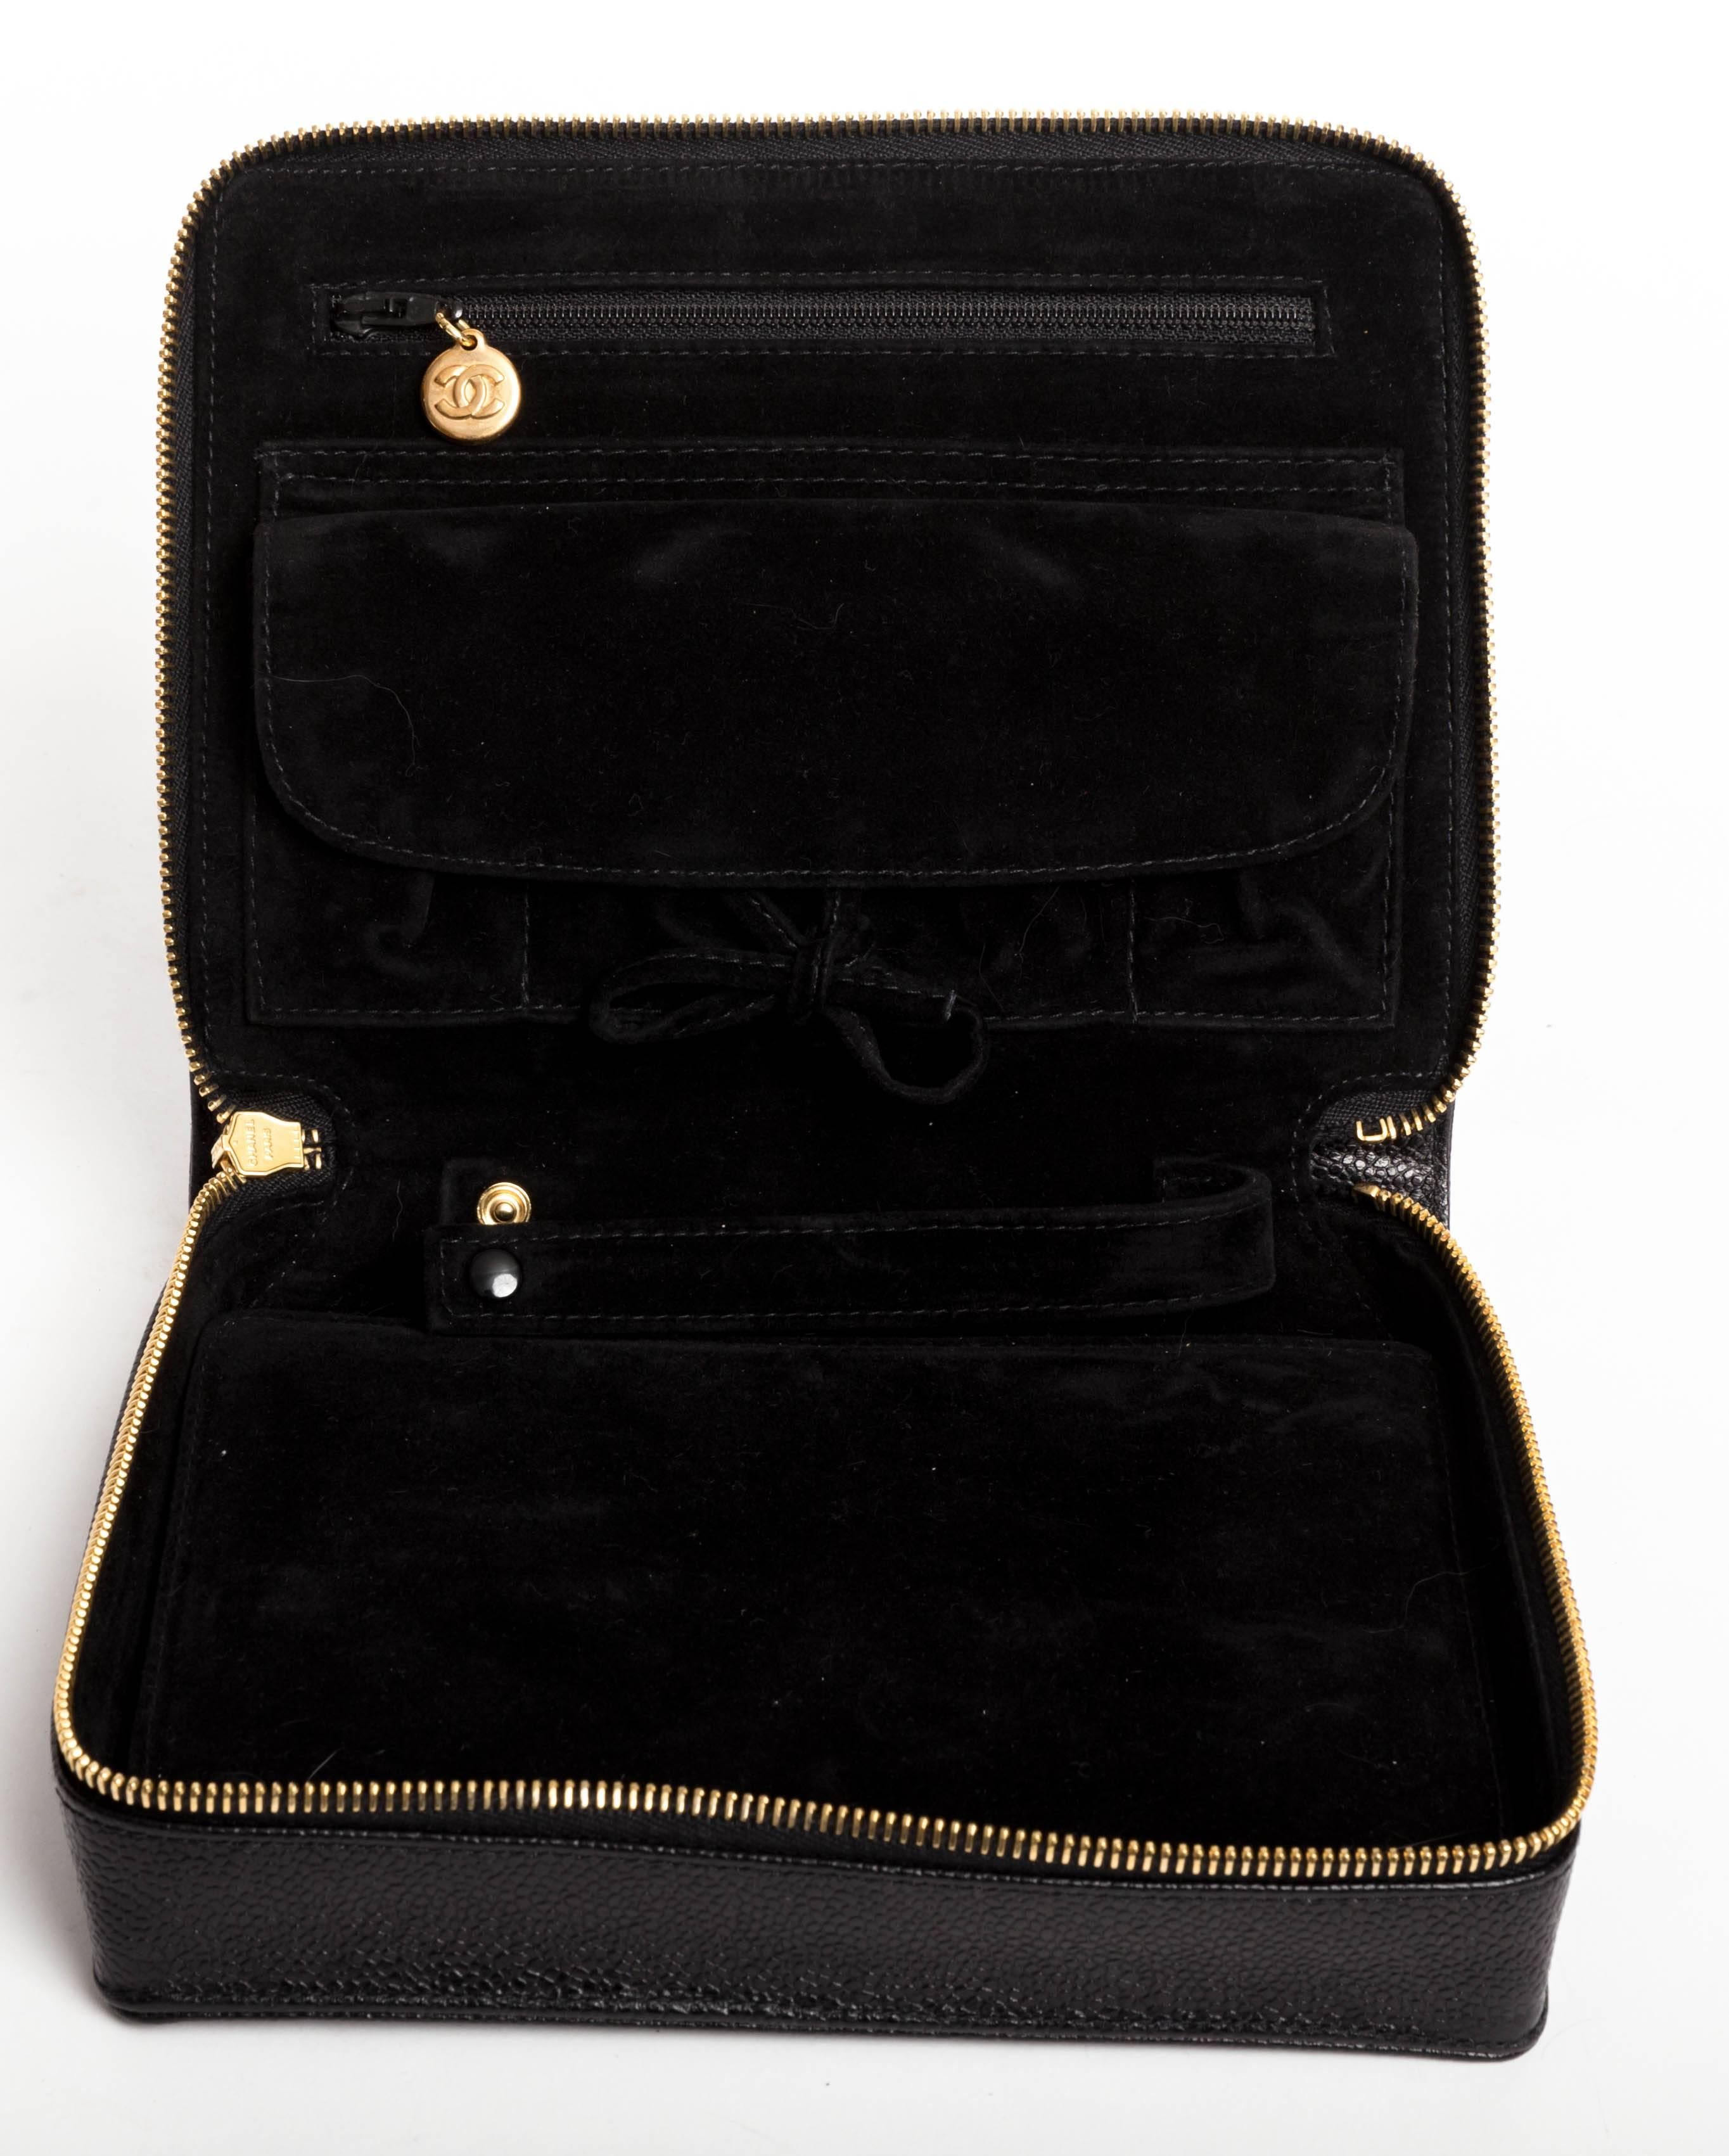 Chic Vintage Chanel Black Caviar Jewelry Case 3